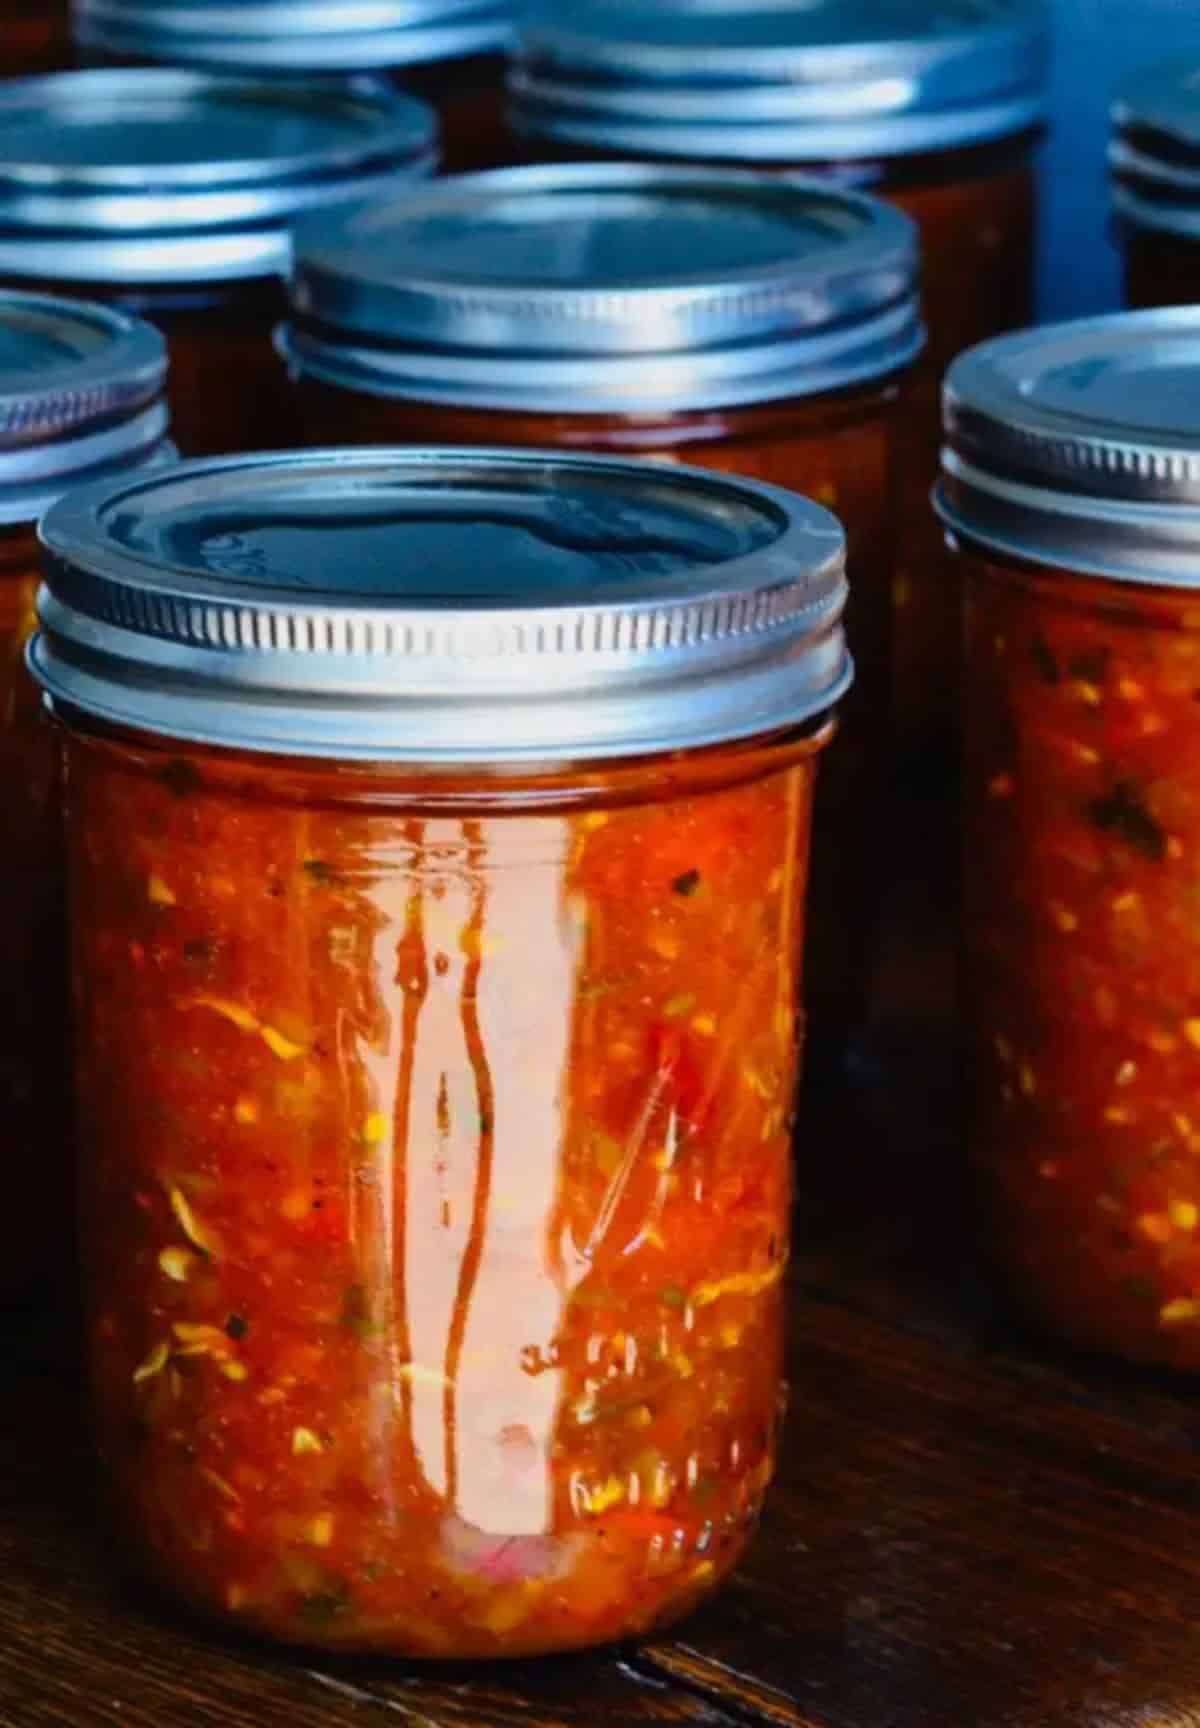 Sweet smokey zucchini salsa canned in glass jars.